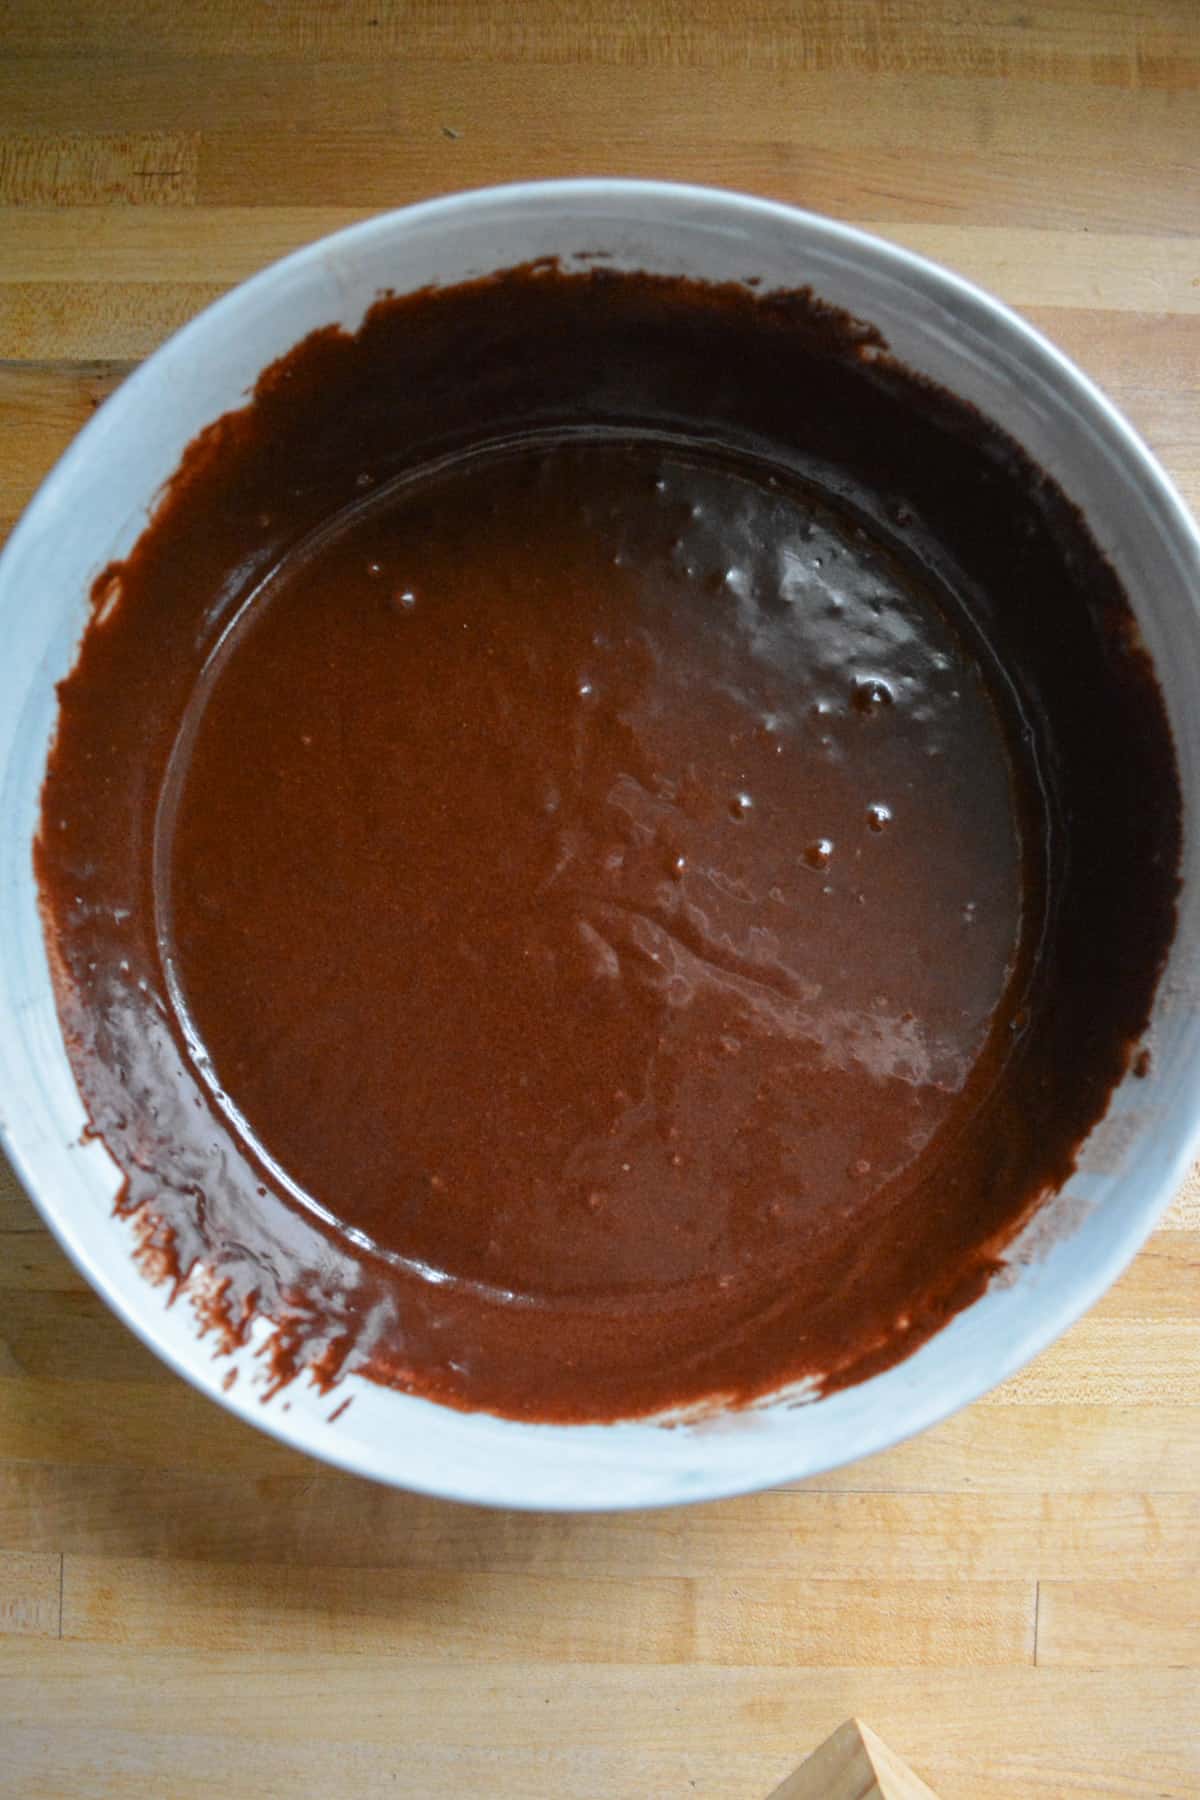 Vegan chocolate cake batter in a mixing bowl.